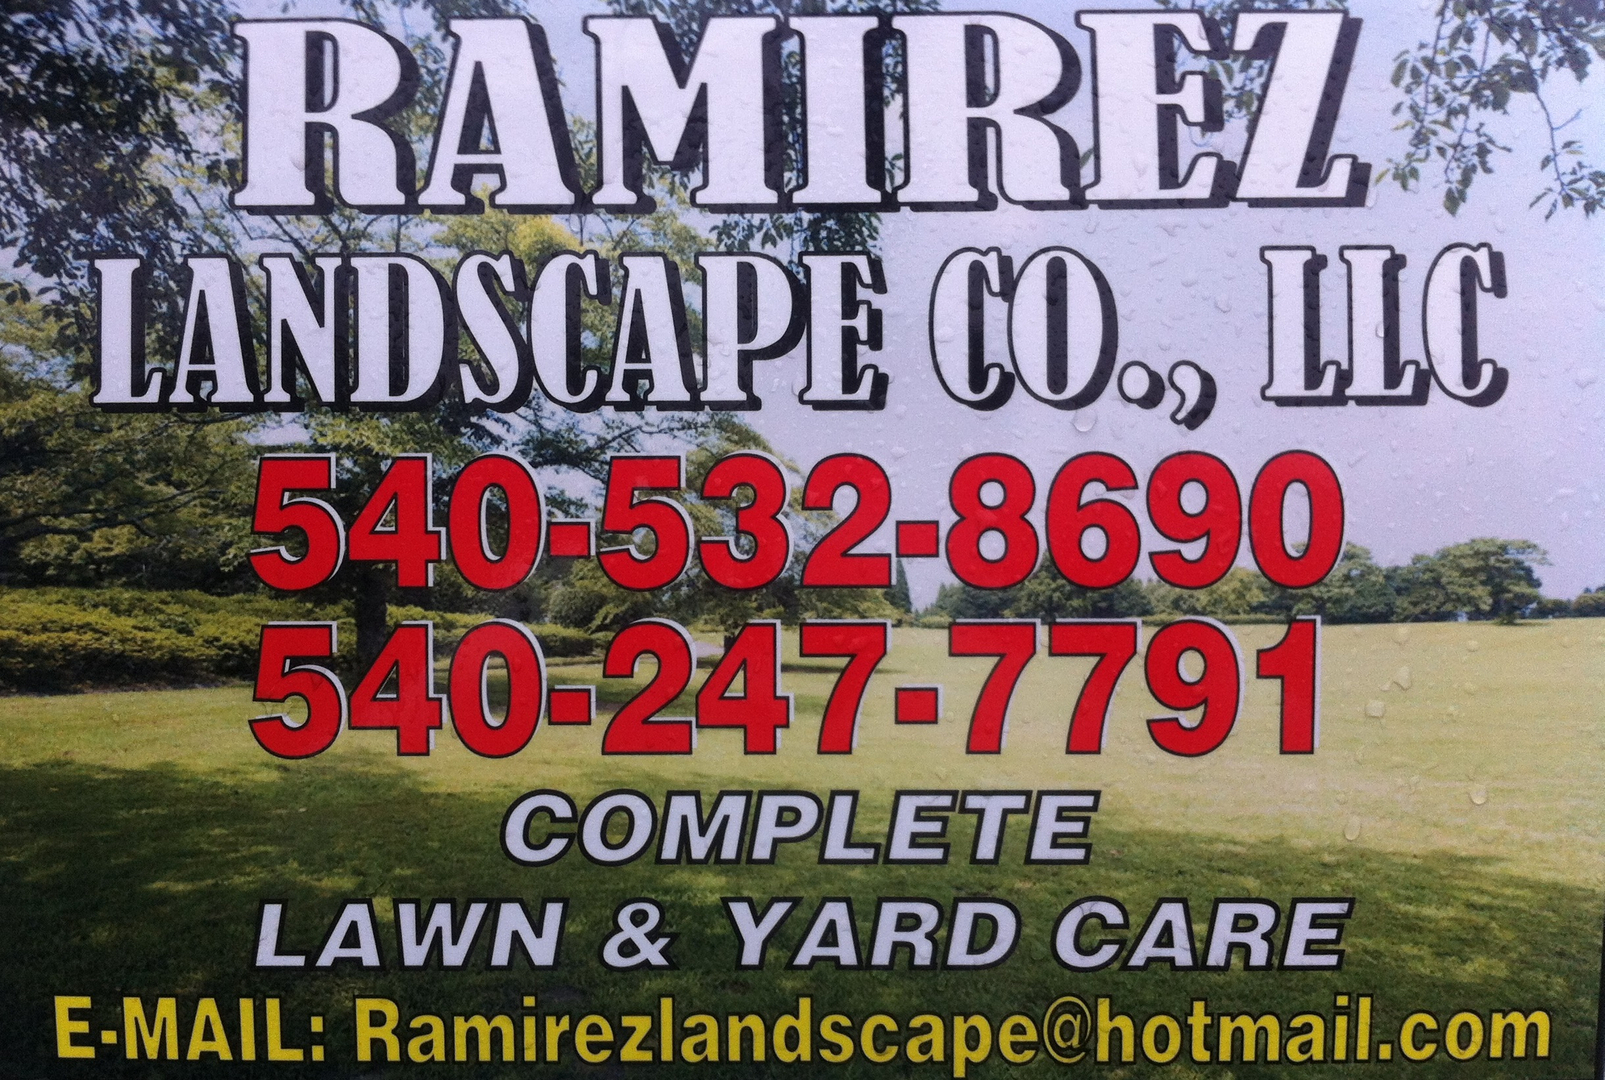 Ramirez Landscape Co. LLC